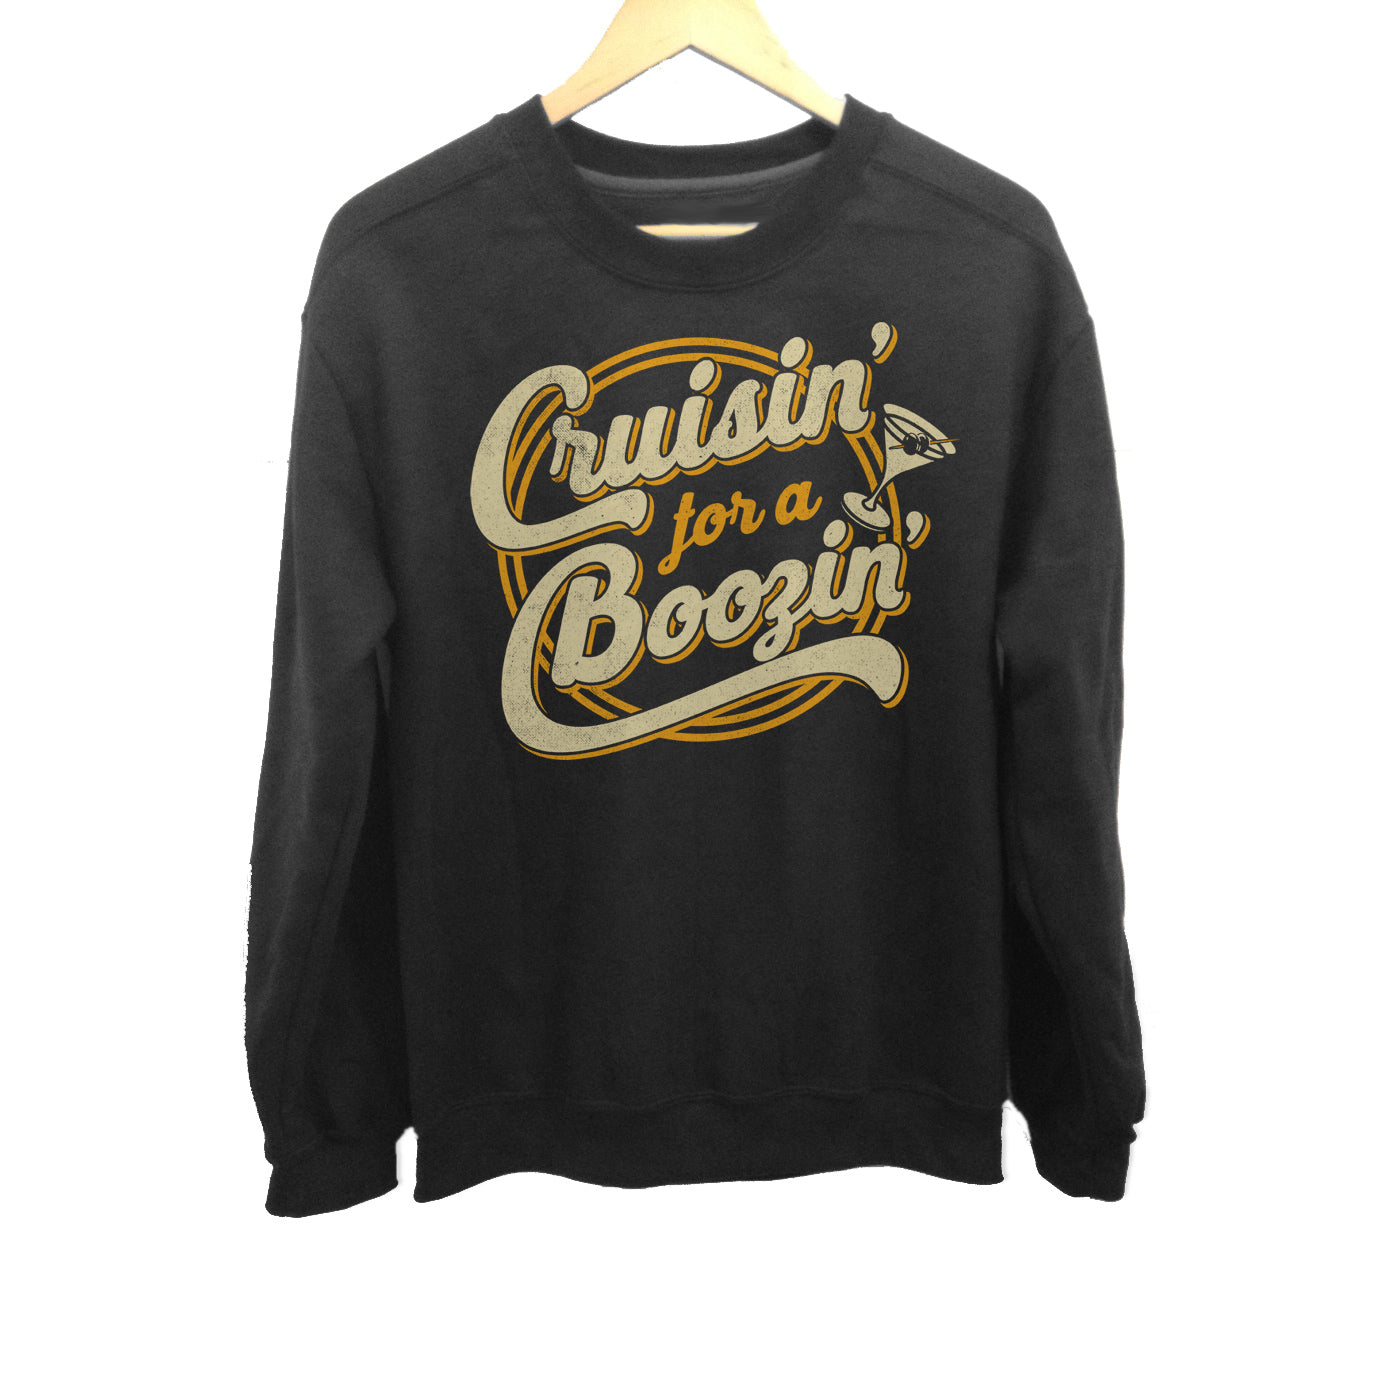 Unisex Cruisin for a Boozin Sweatshirt - Funny Drinking Shirt